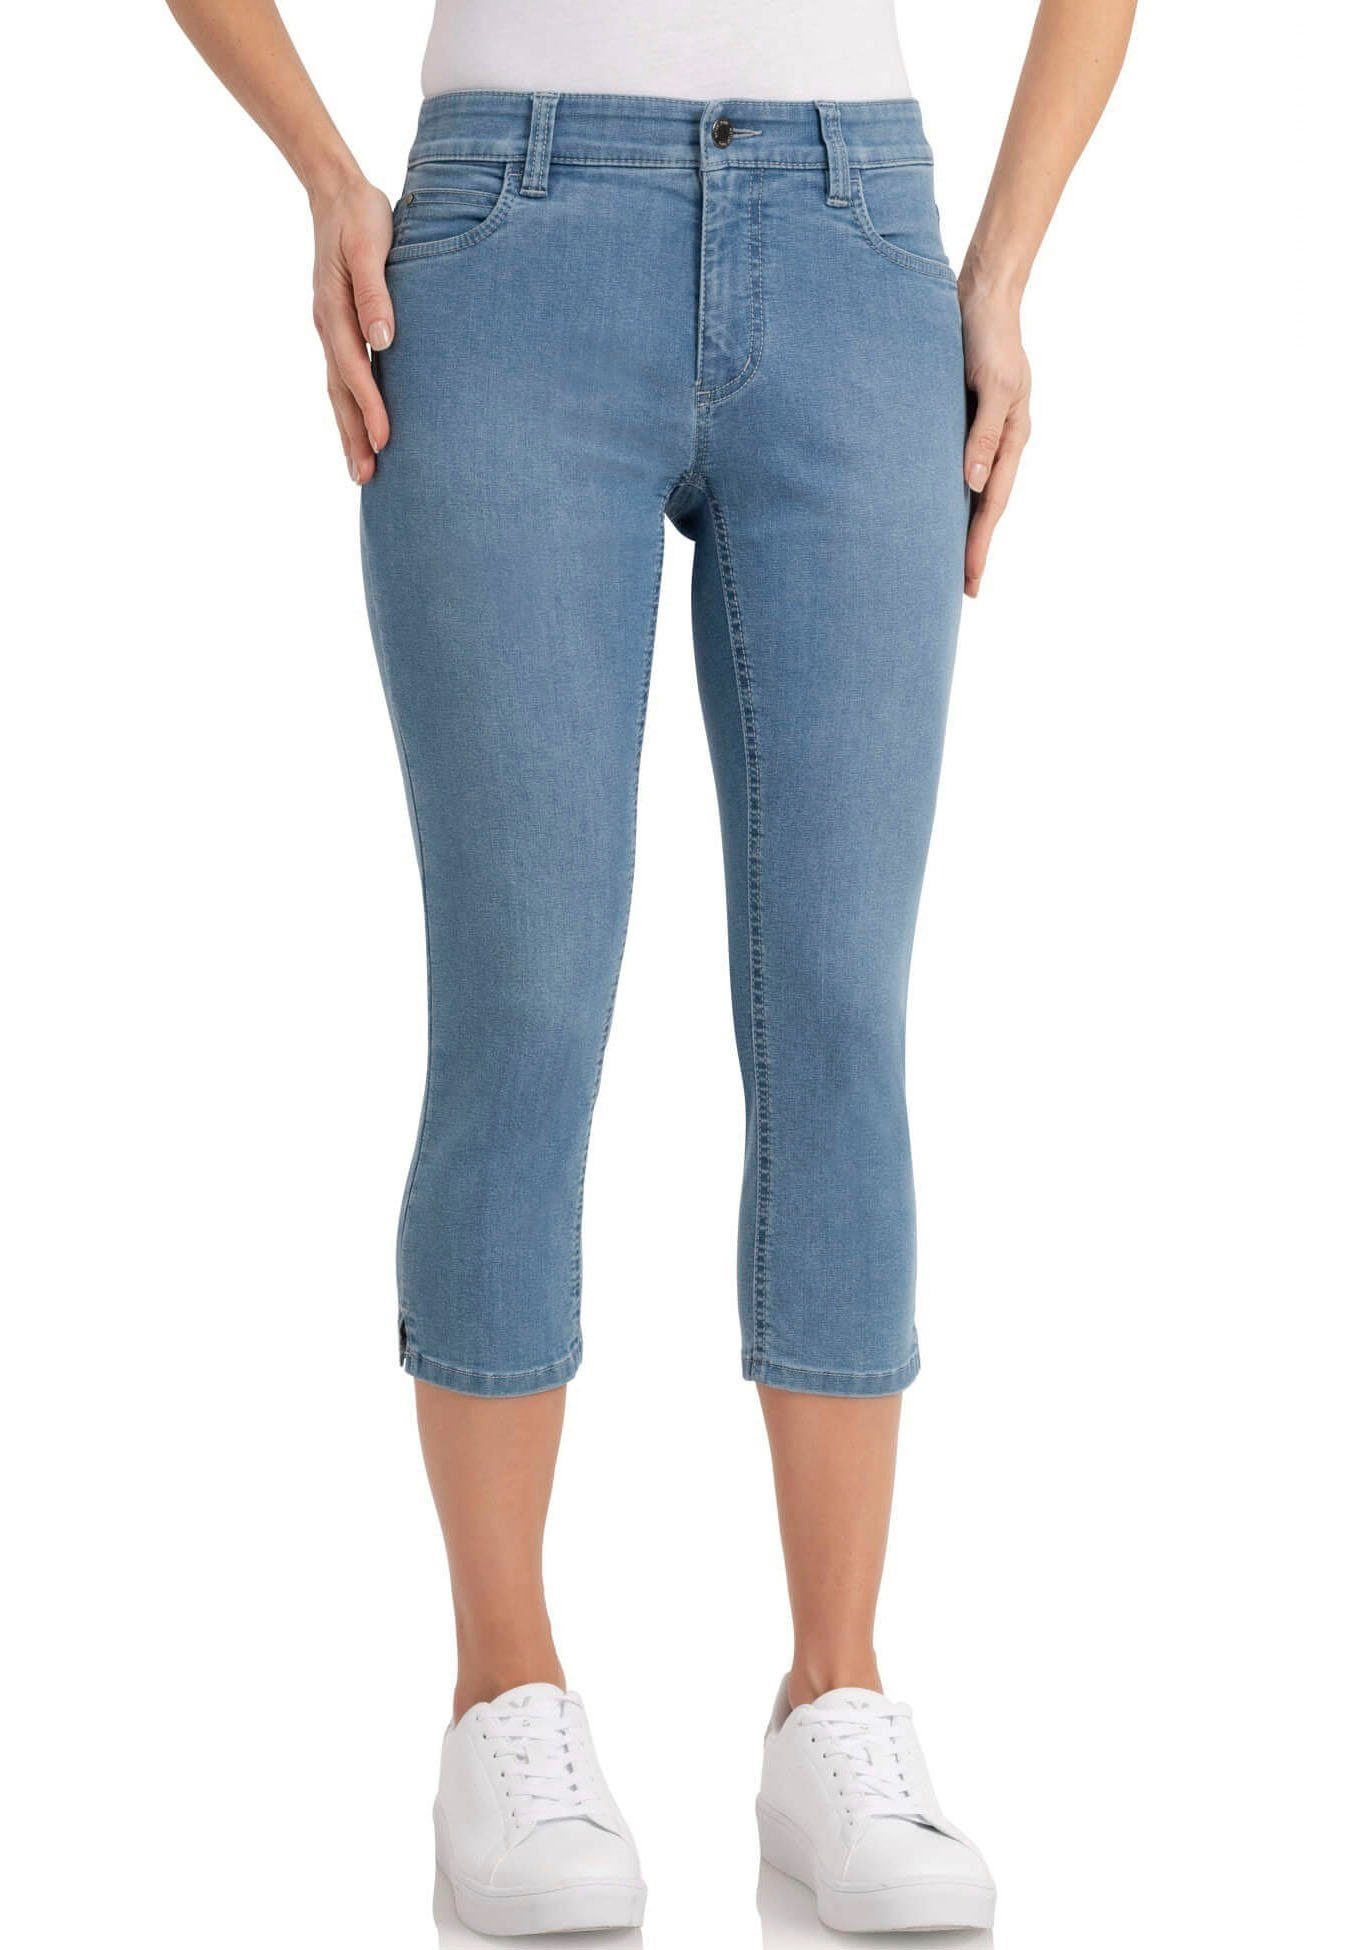 Wonderjeans Capri jeans